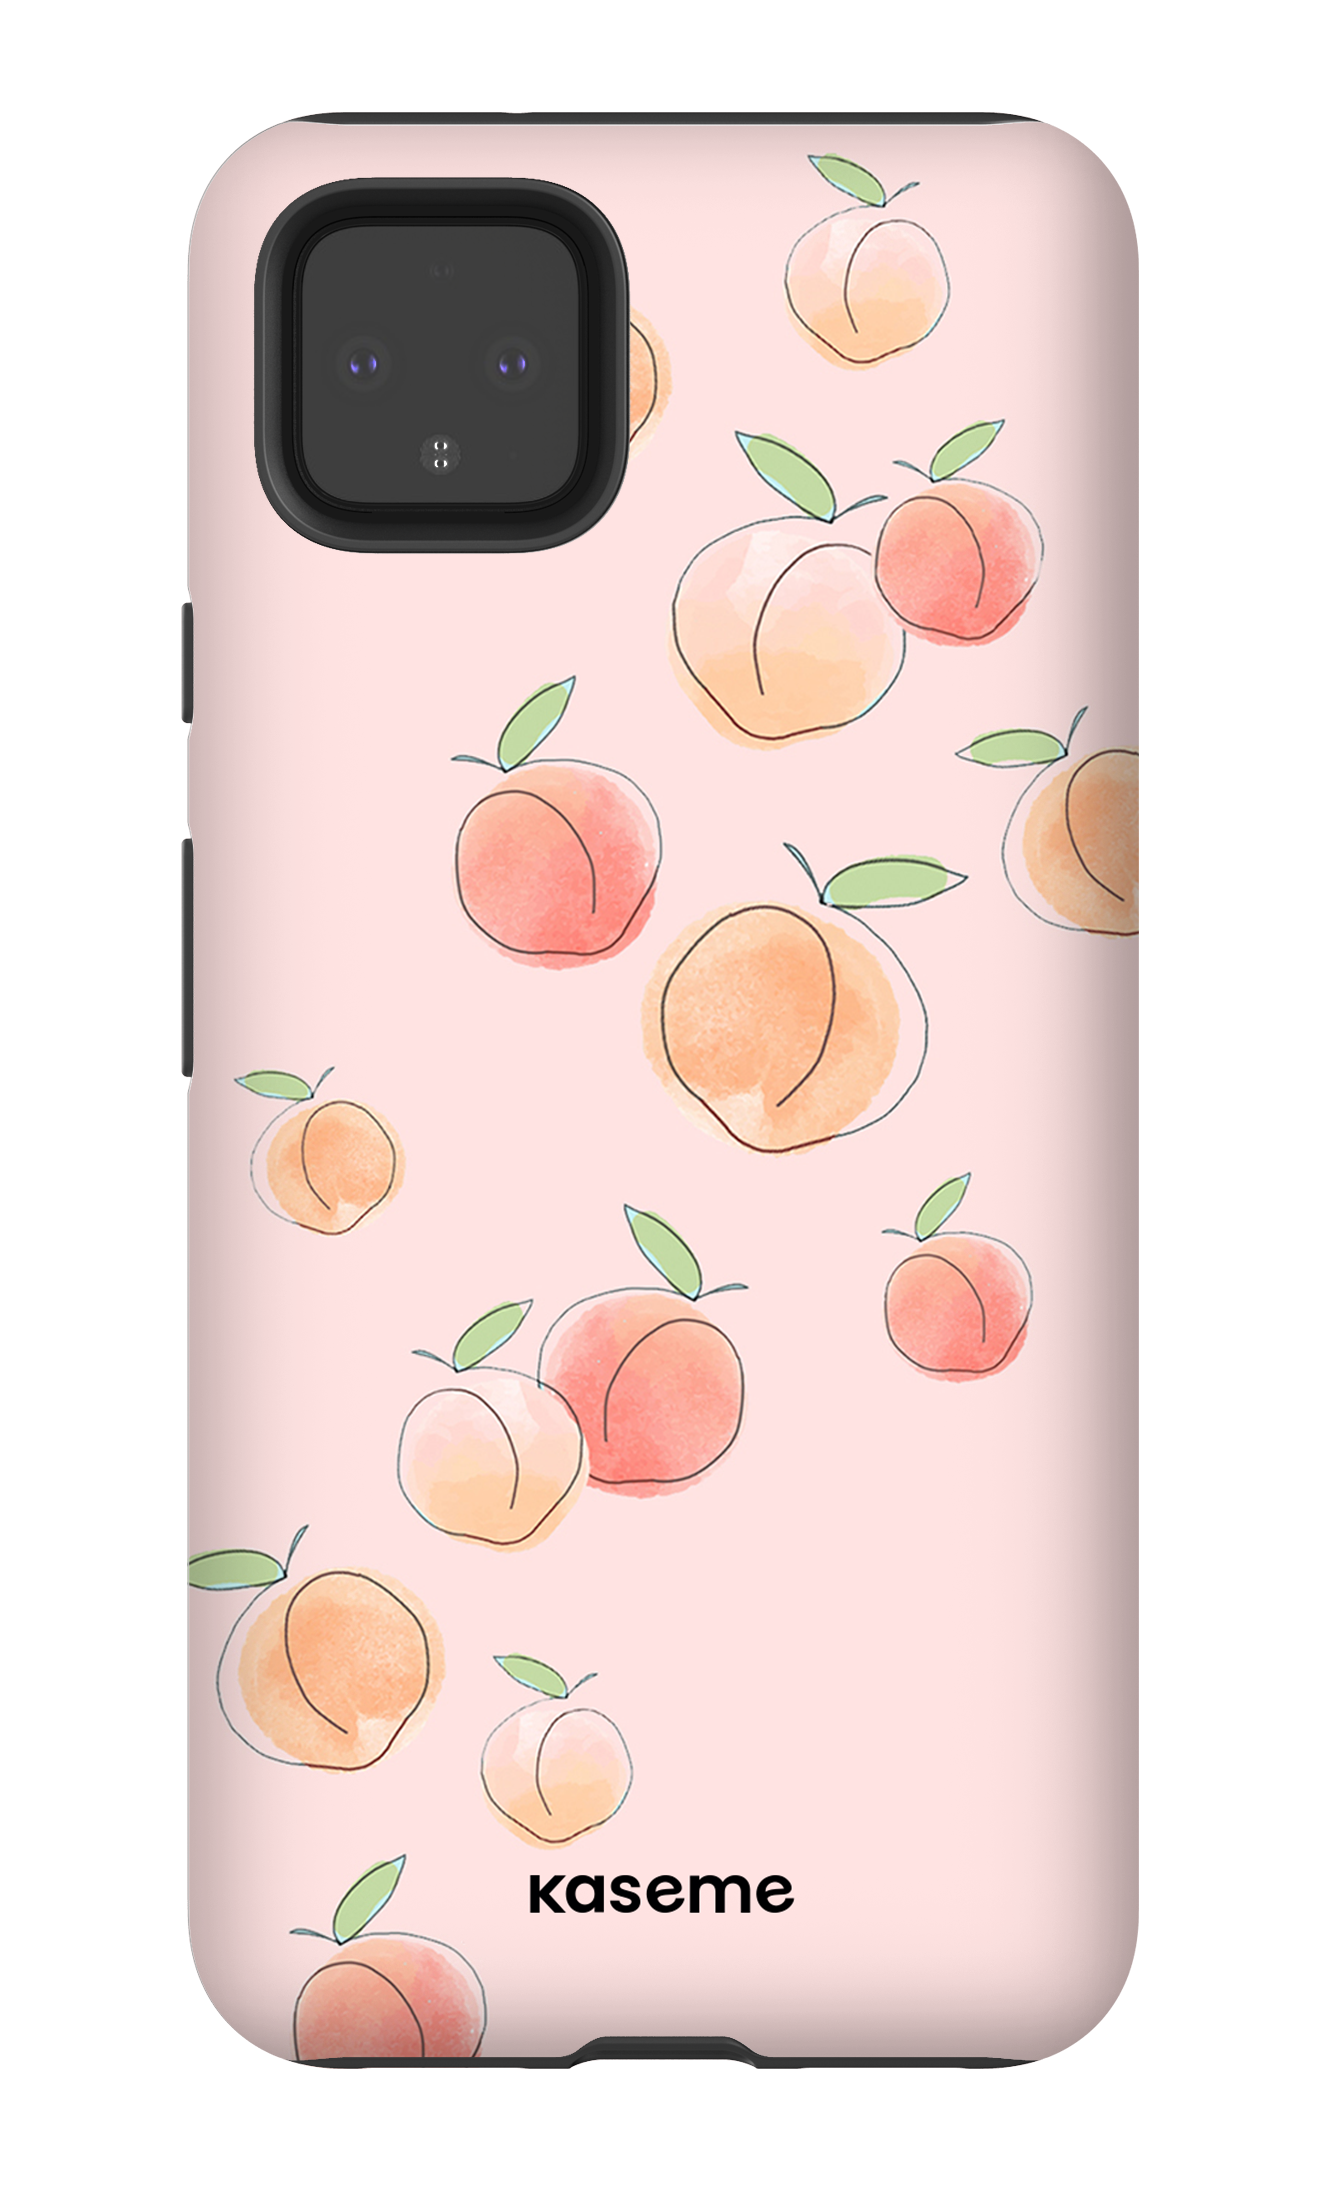 Peachy pink - Google Pixel 4 XL